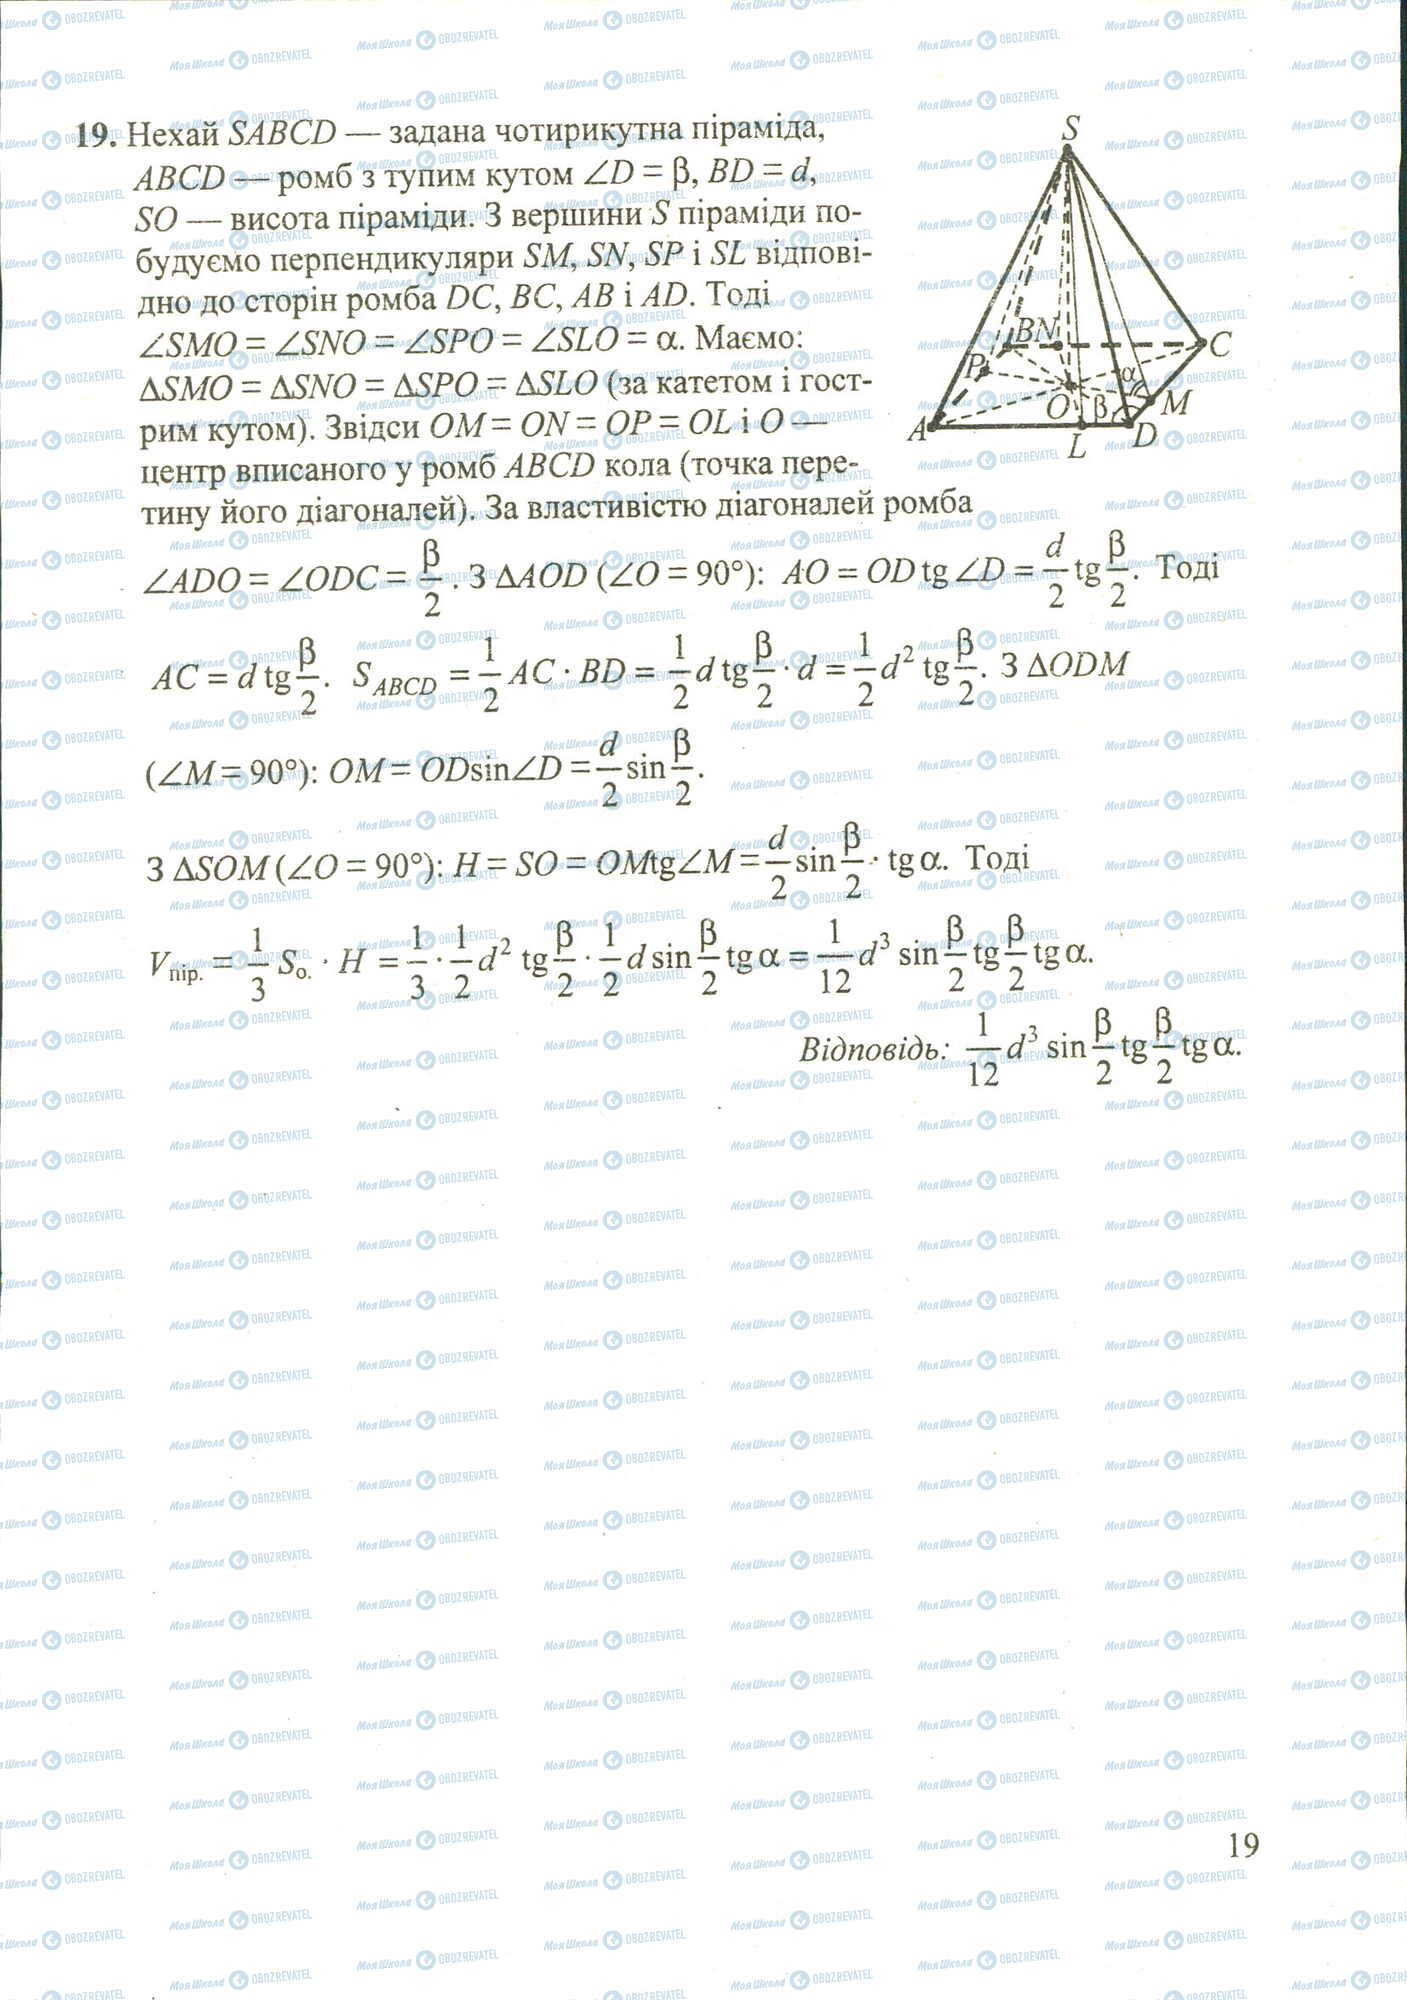 ДПА Математика 11 класс страница image0000009A